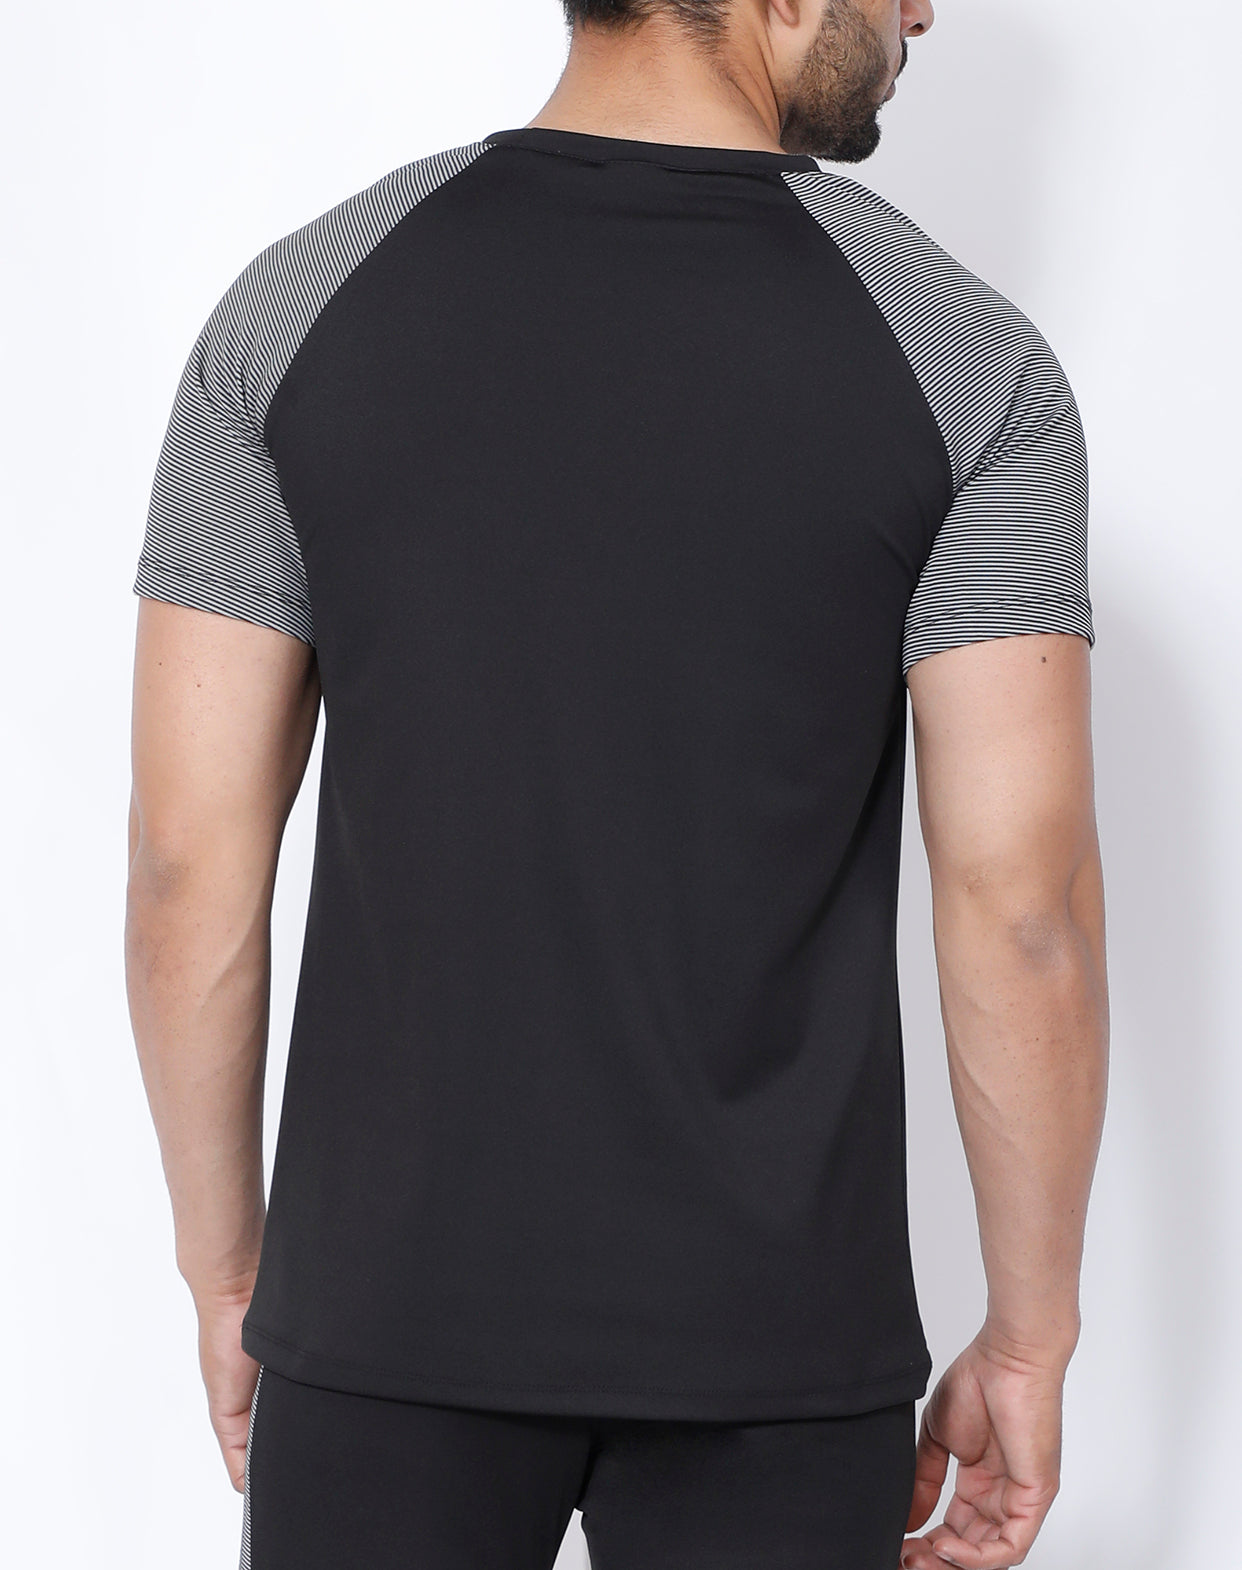 Black Grey Stripes Raglan T-Shirt - Yogue Activewear